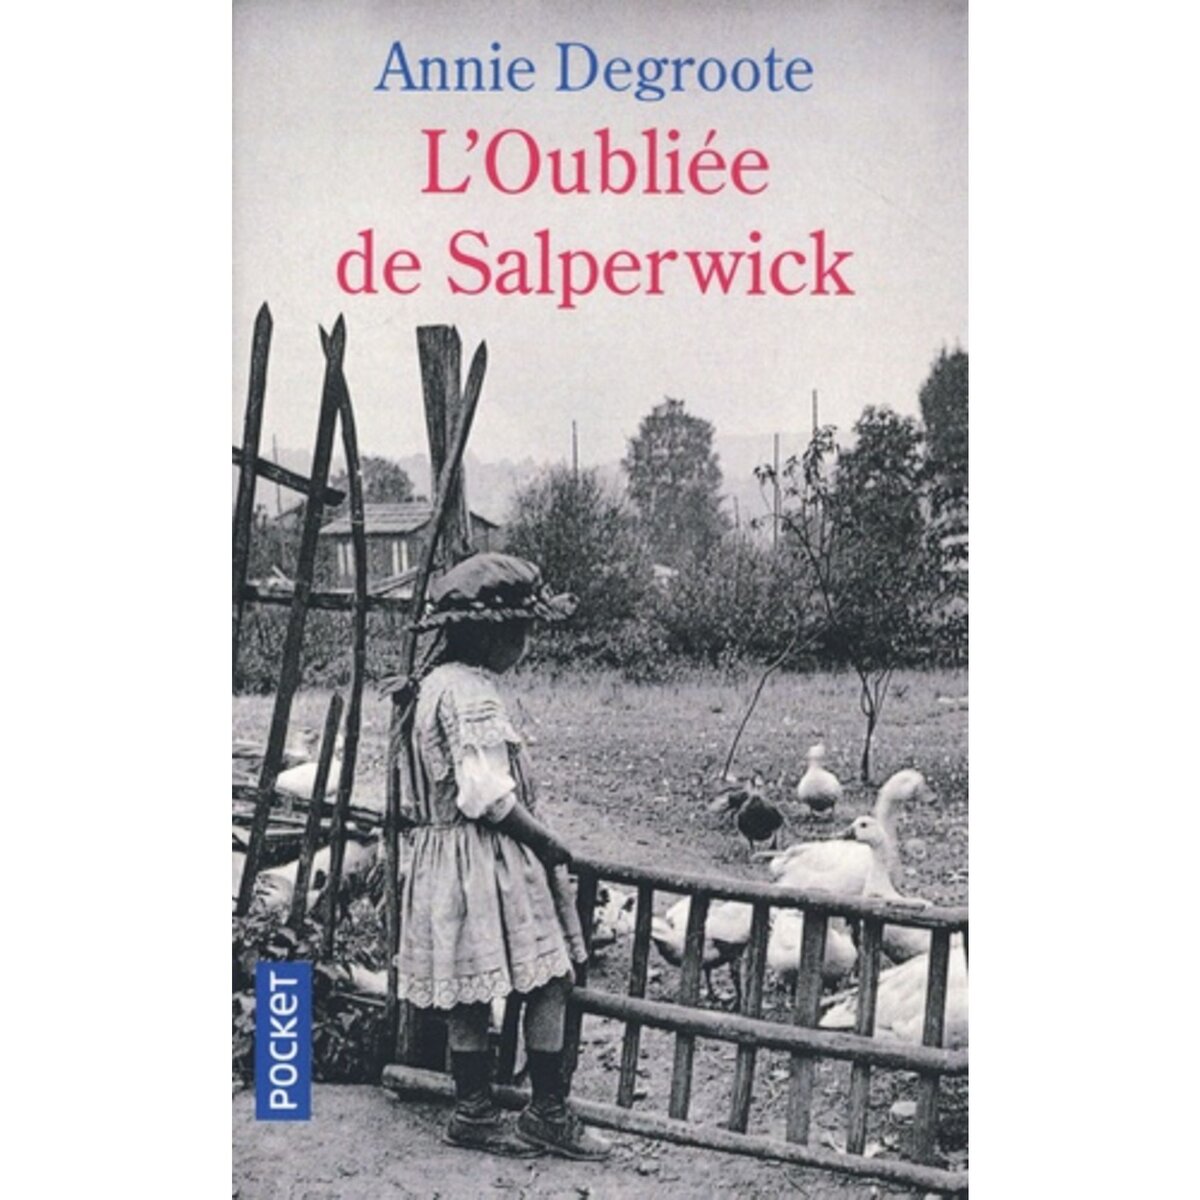  L'OUBLIEE DE SALPERWICK, Degroote Annie